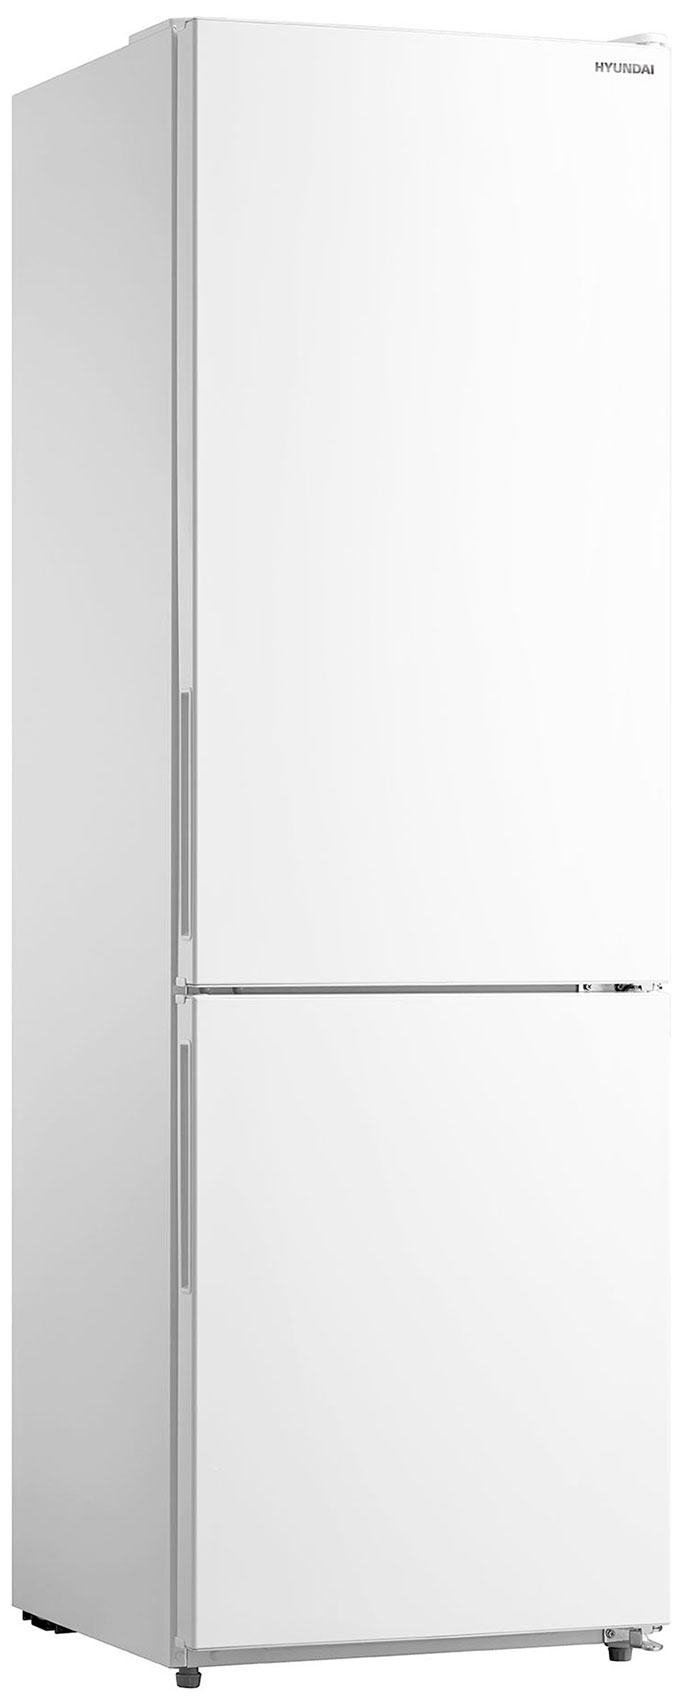 Холодильник HYUNDAI CC3093FWT белый холодильник hyundai cc3093fwt белый